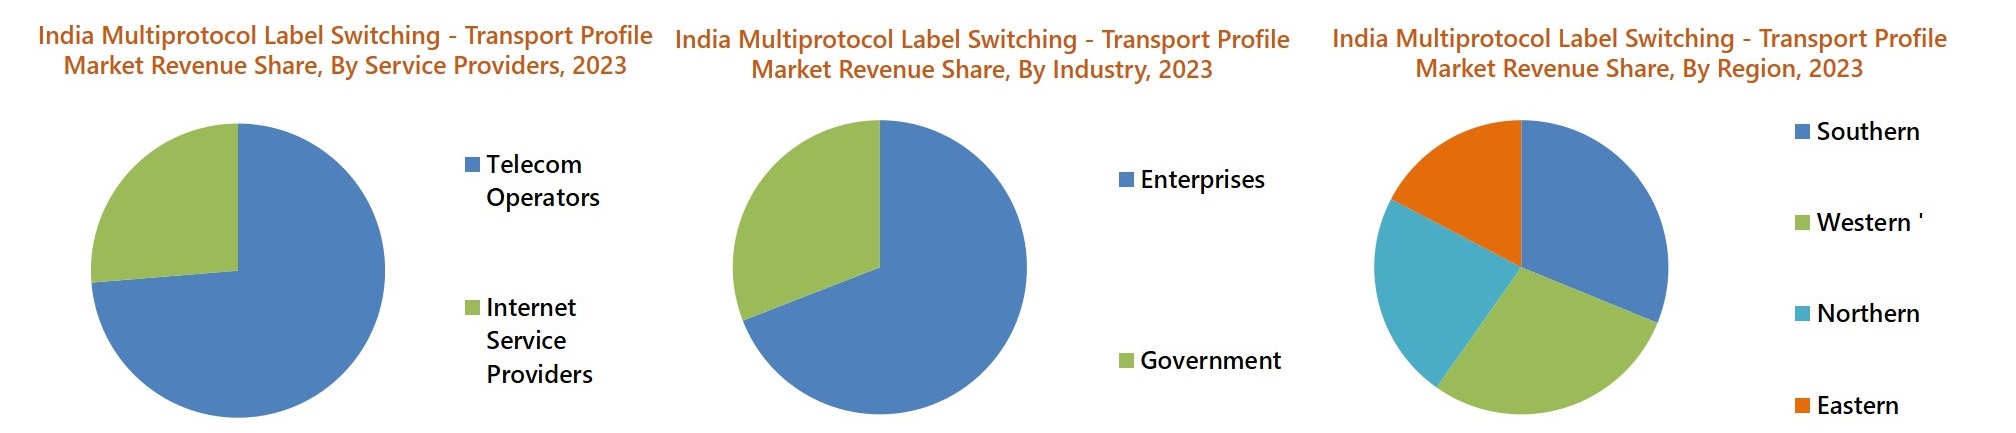 India Multiprotocol Label Switching-Transport Profile Market